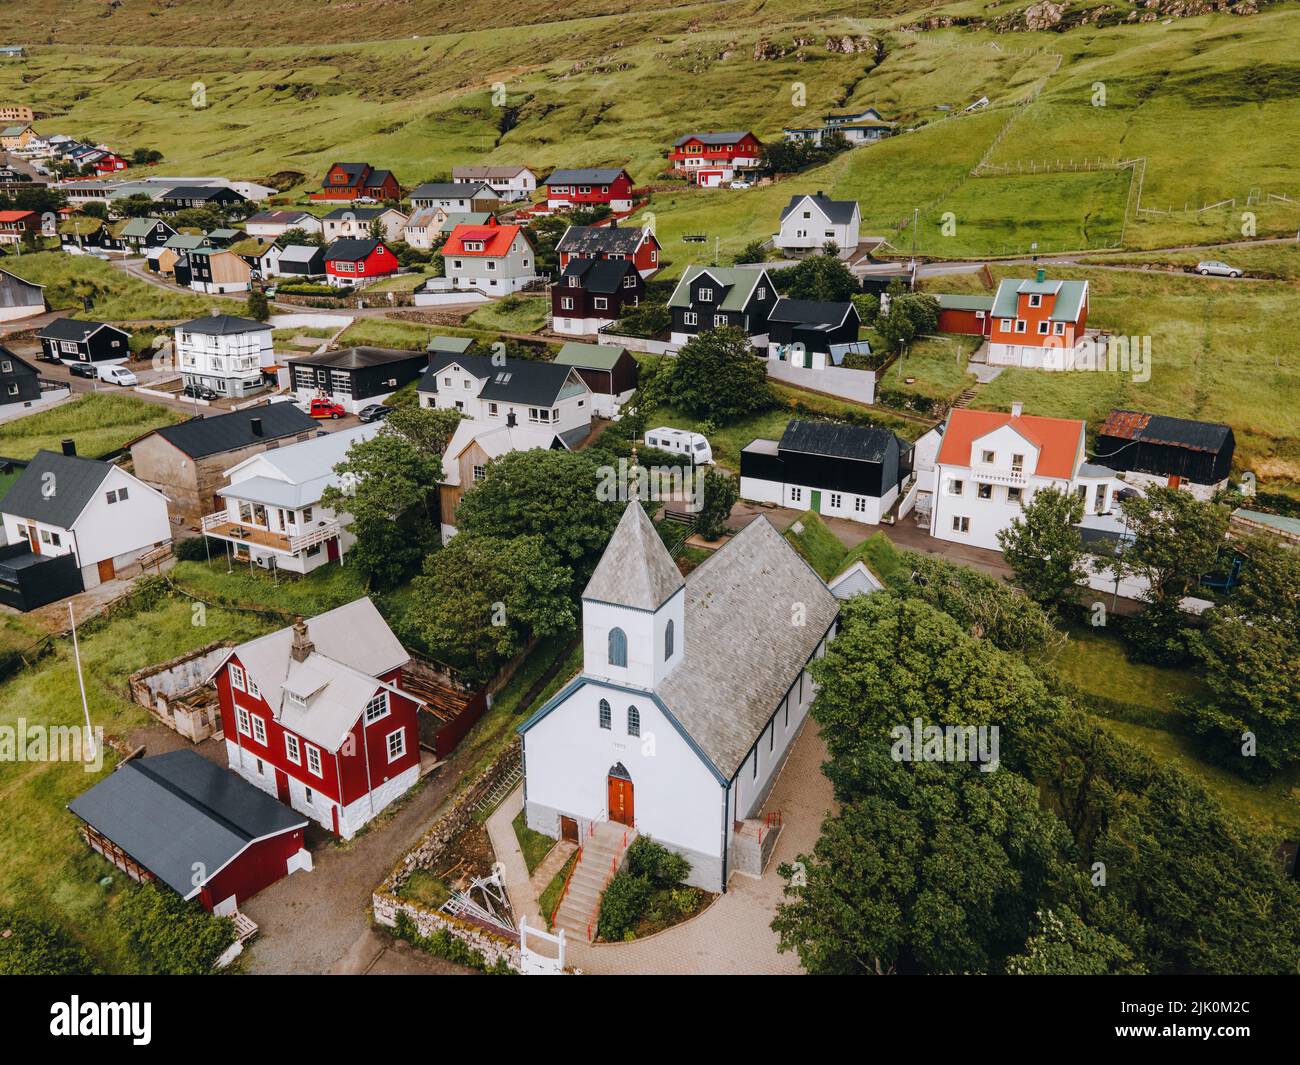 the Kvívík Village in the Faroe Islands Stock Photo